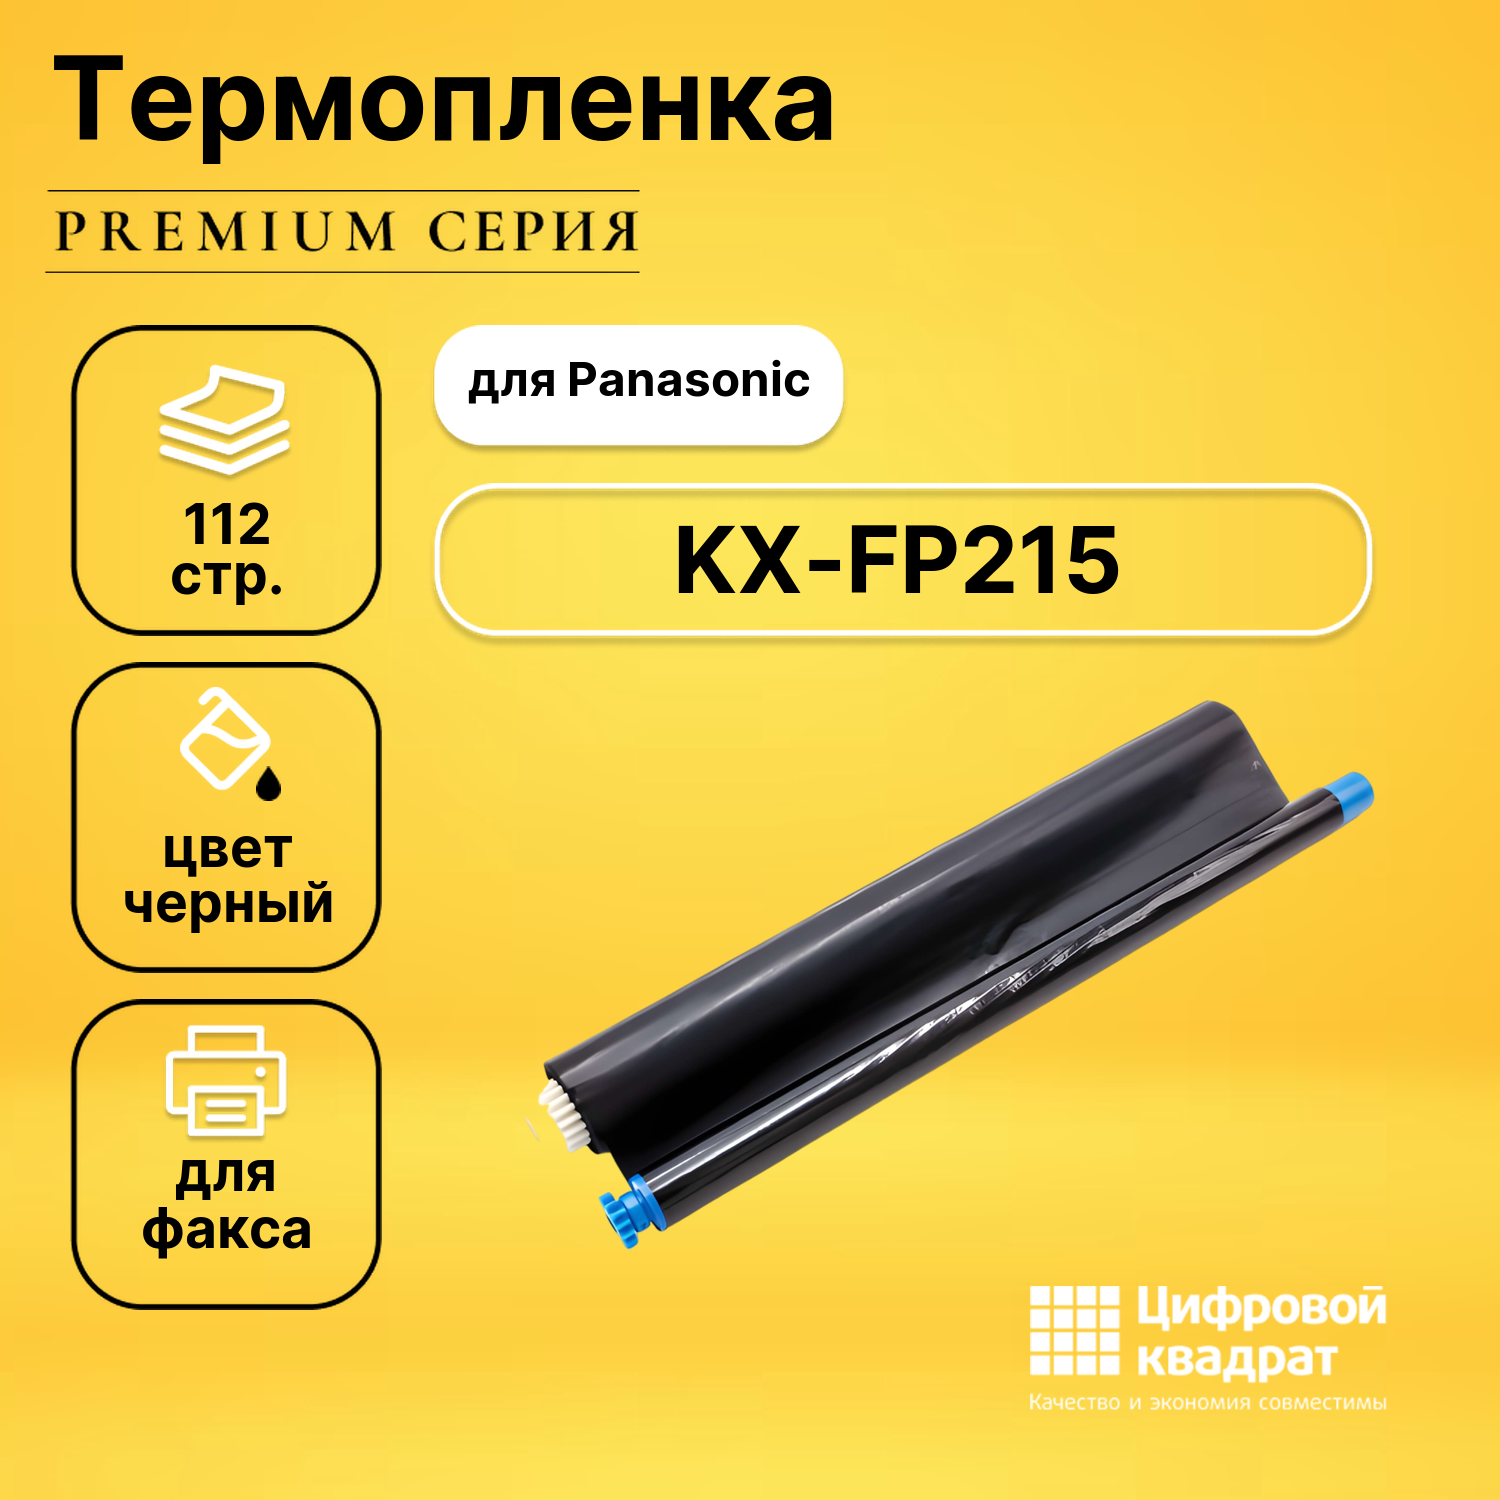 Термопленка DS для Panasonic KX-FP215 совместимая